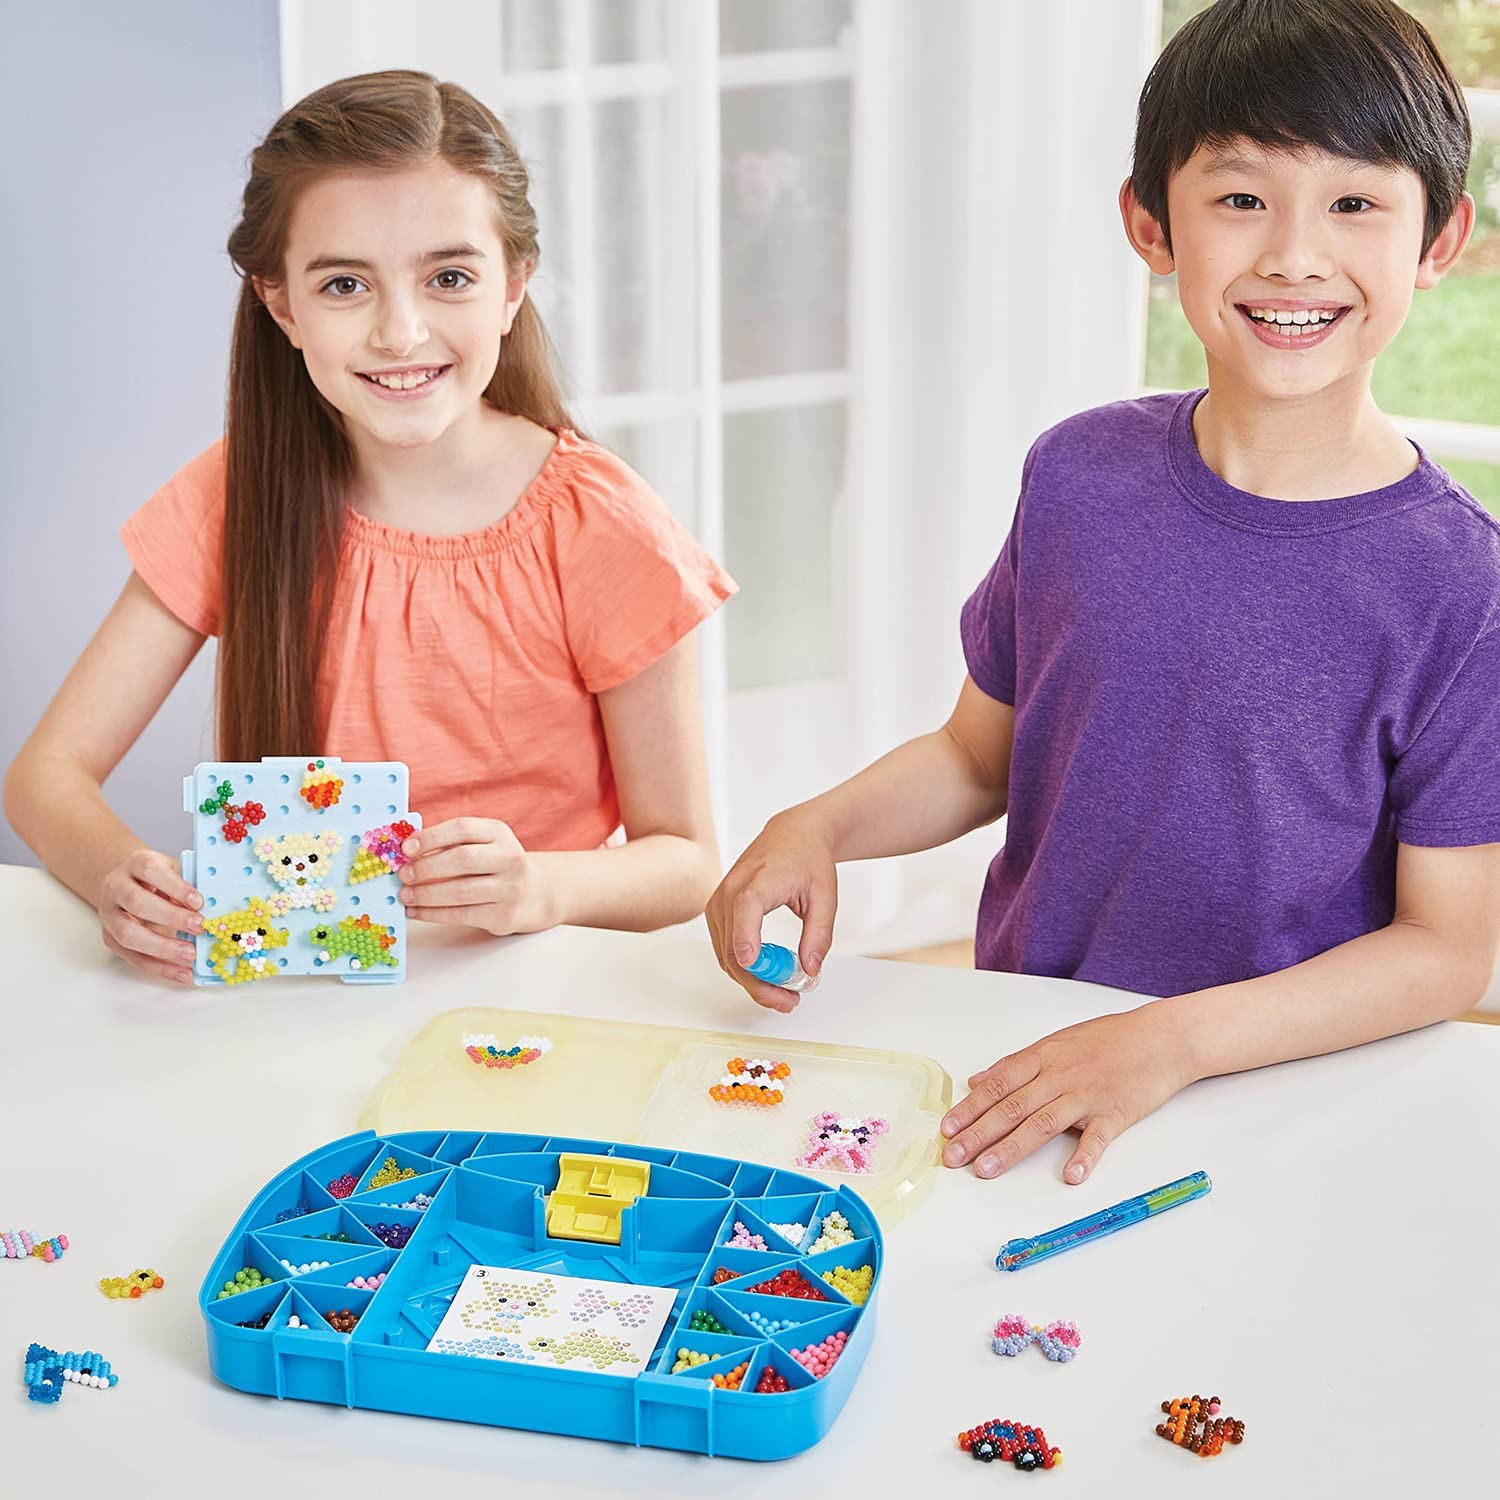 Hama Beads Puzzle Toys, Aqua Beads Children